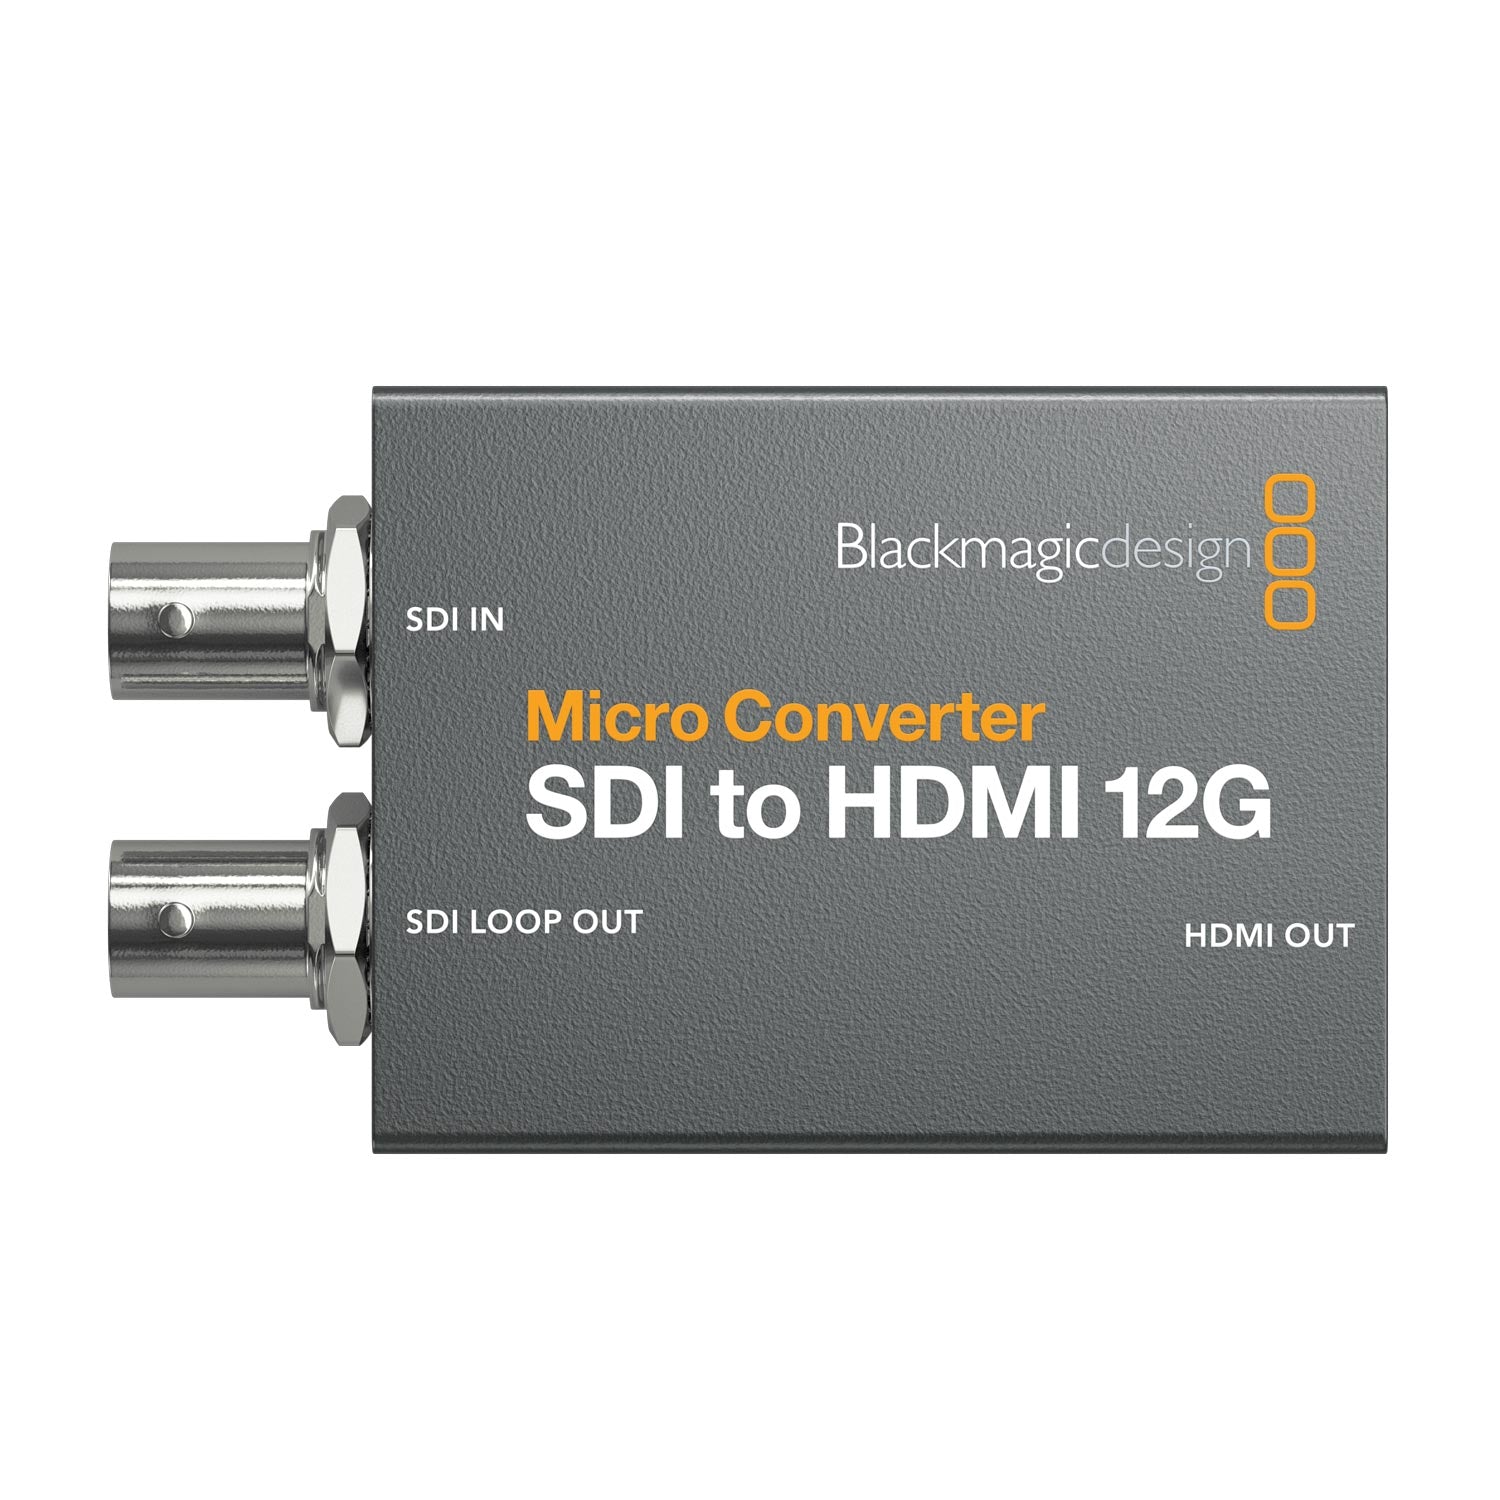 BlackmagicDesign Micro Converter SDI to HDMI 12G wPSU (パワーサプライ付属)